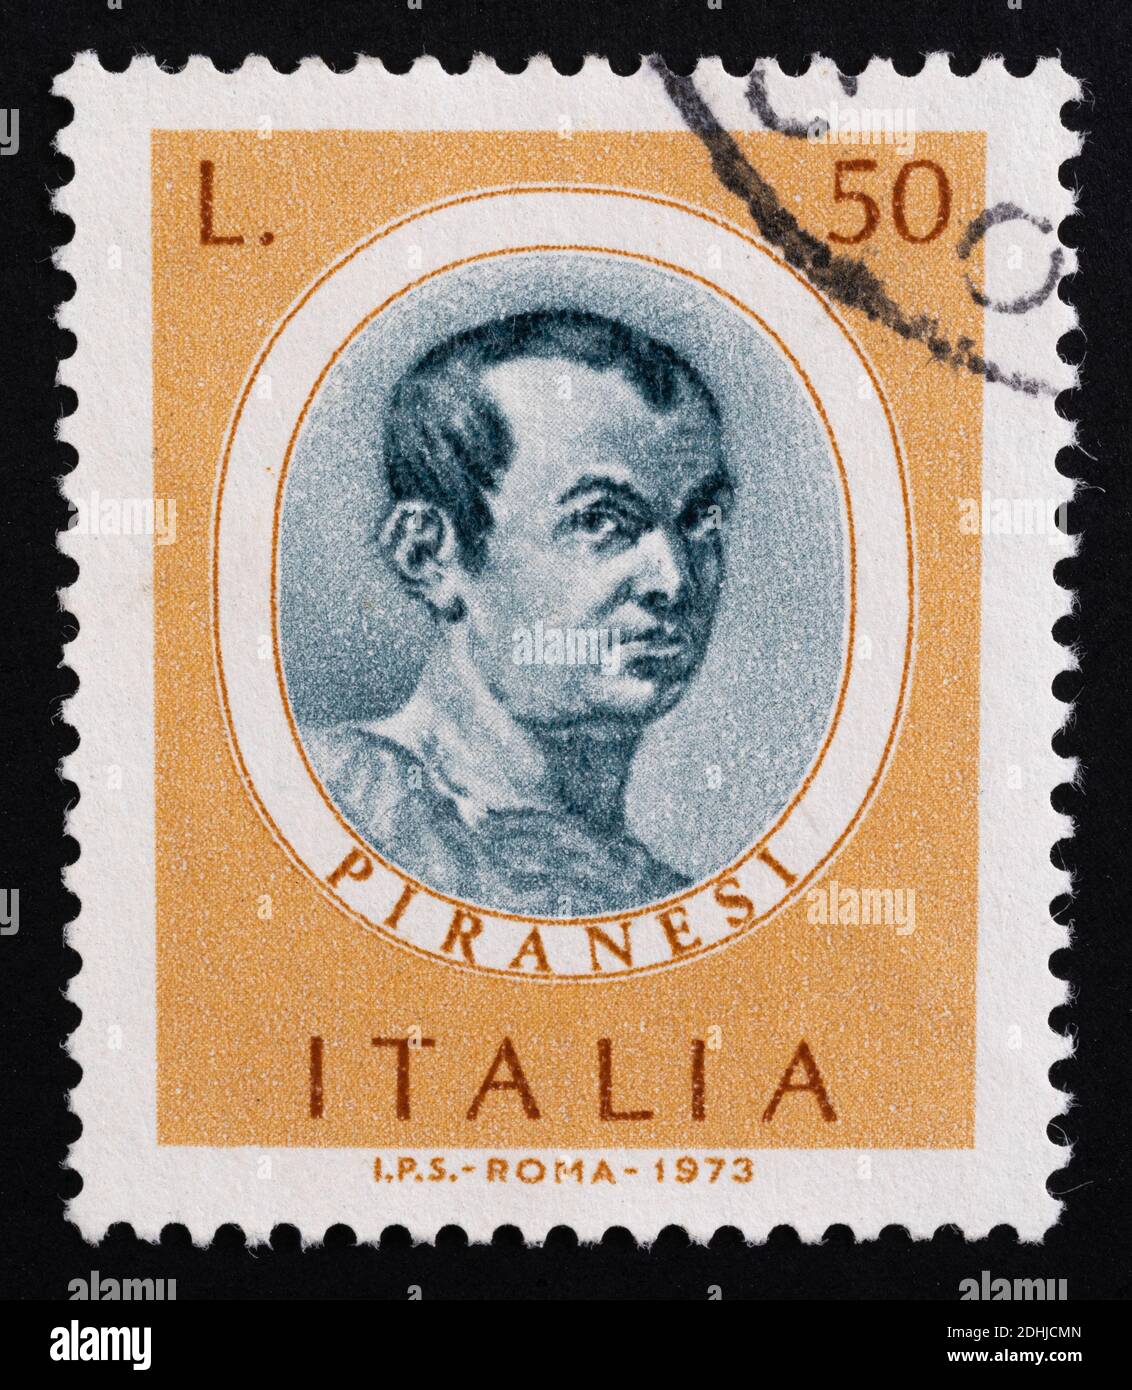 Udine, Italy. December 10, 2020. the commemoration of Giovanni Battista Piranesi on an Italian postage stamp Stock Photo